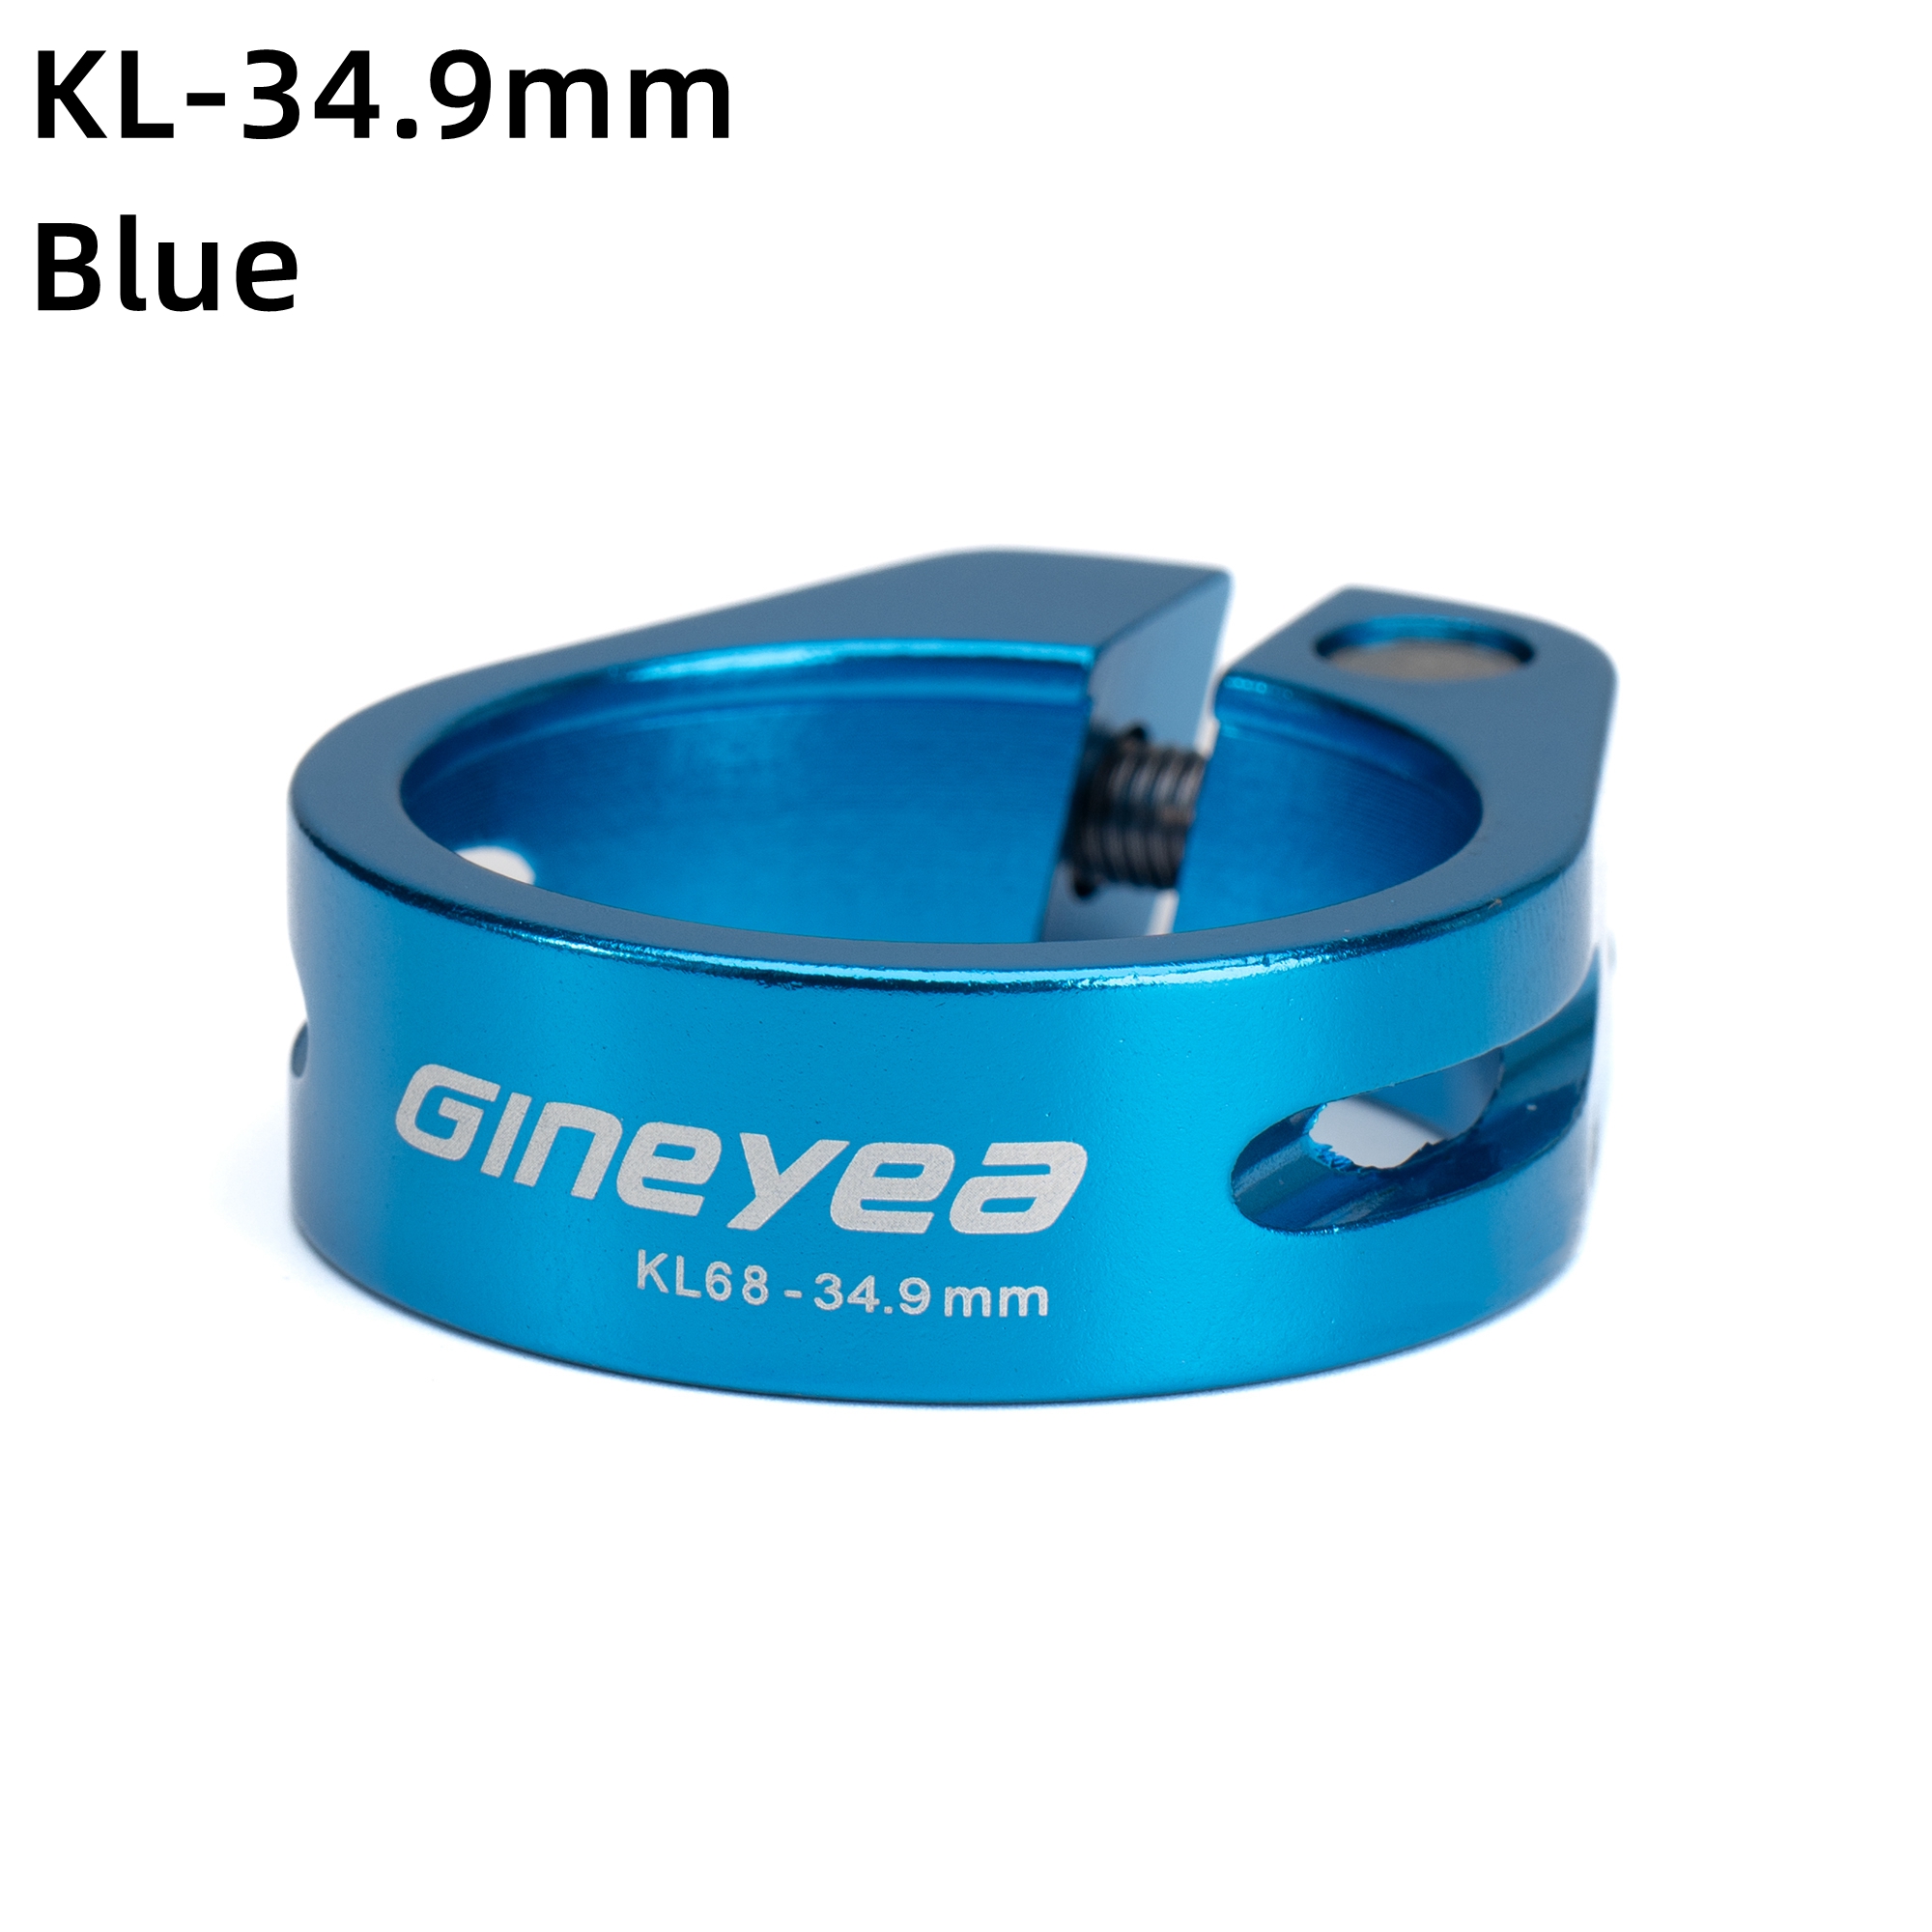 34.9mm blue